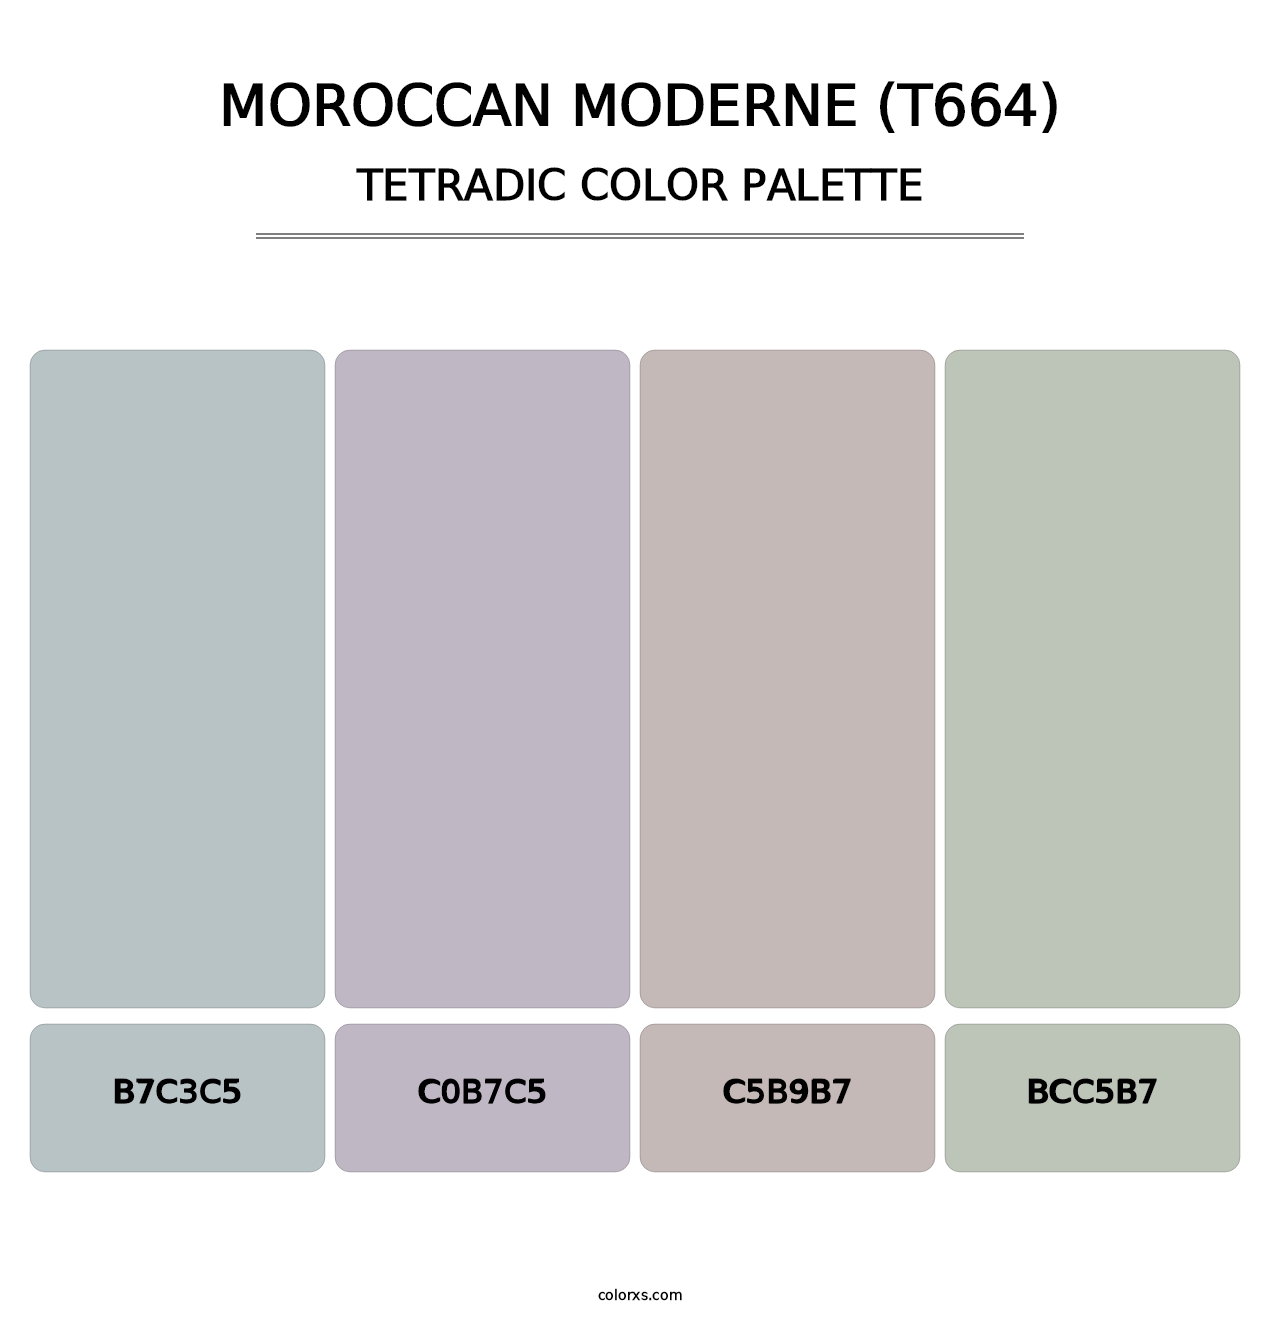 Moroccan Moderne (T664) - Tetradic Color Palette